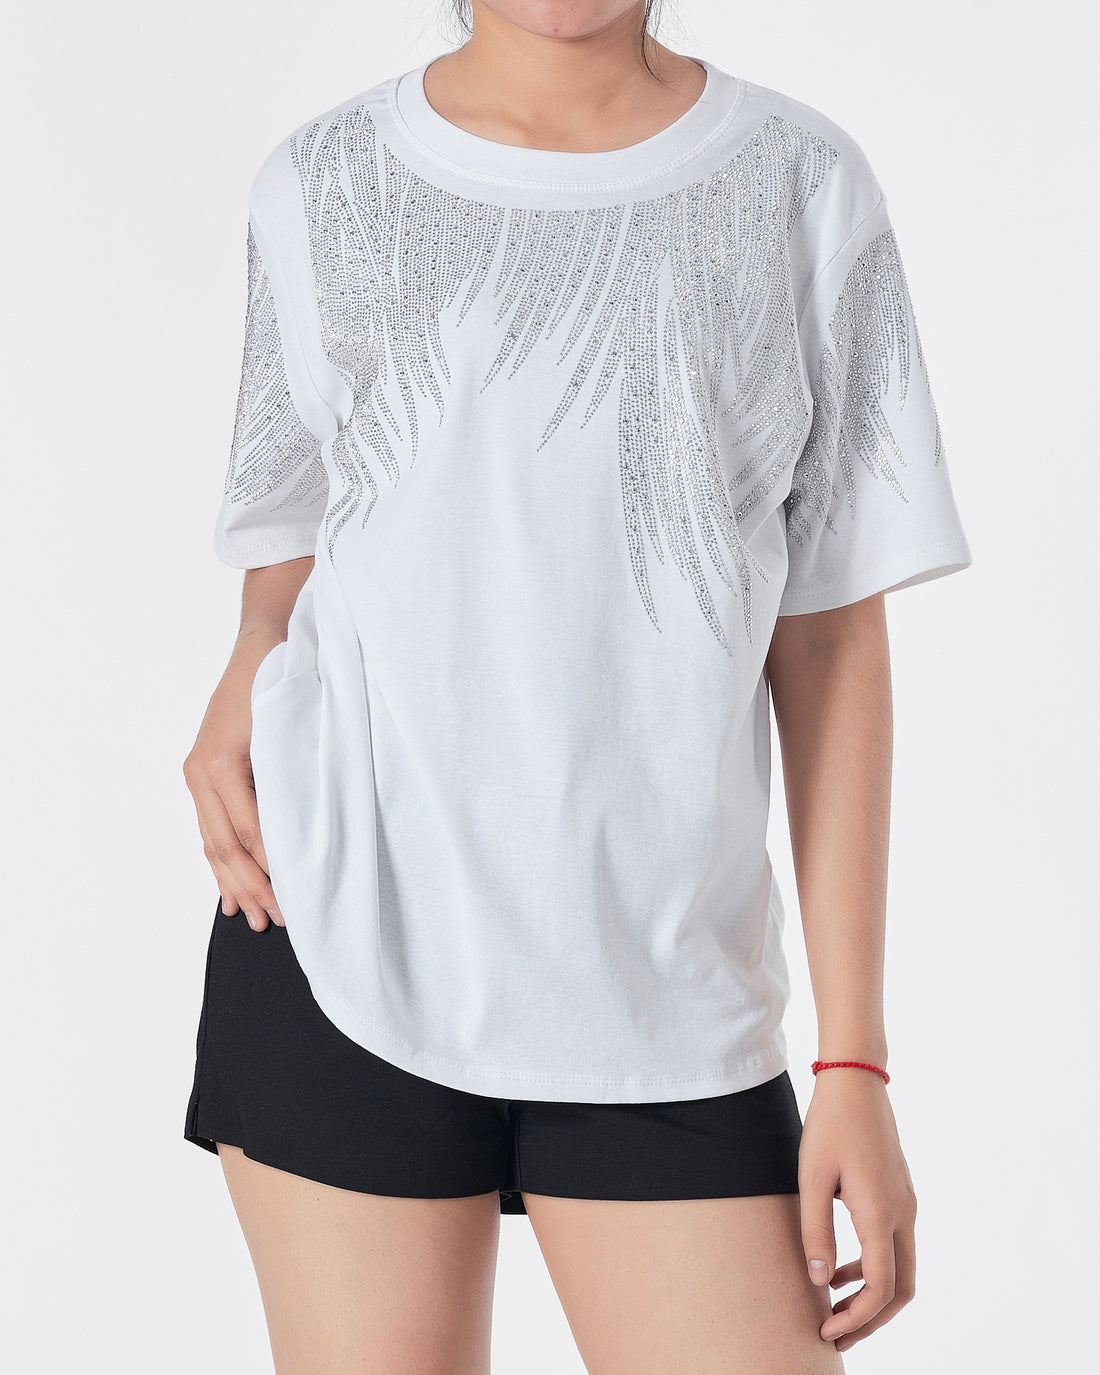 Rhinestone Lady White T-Shirt 15.50